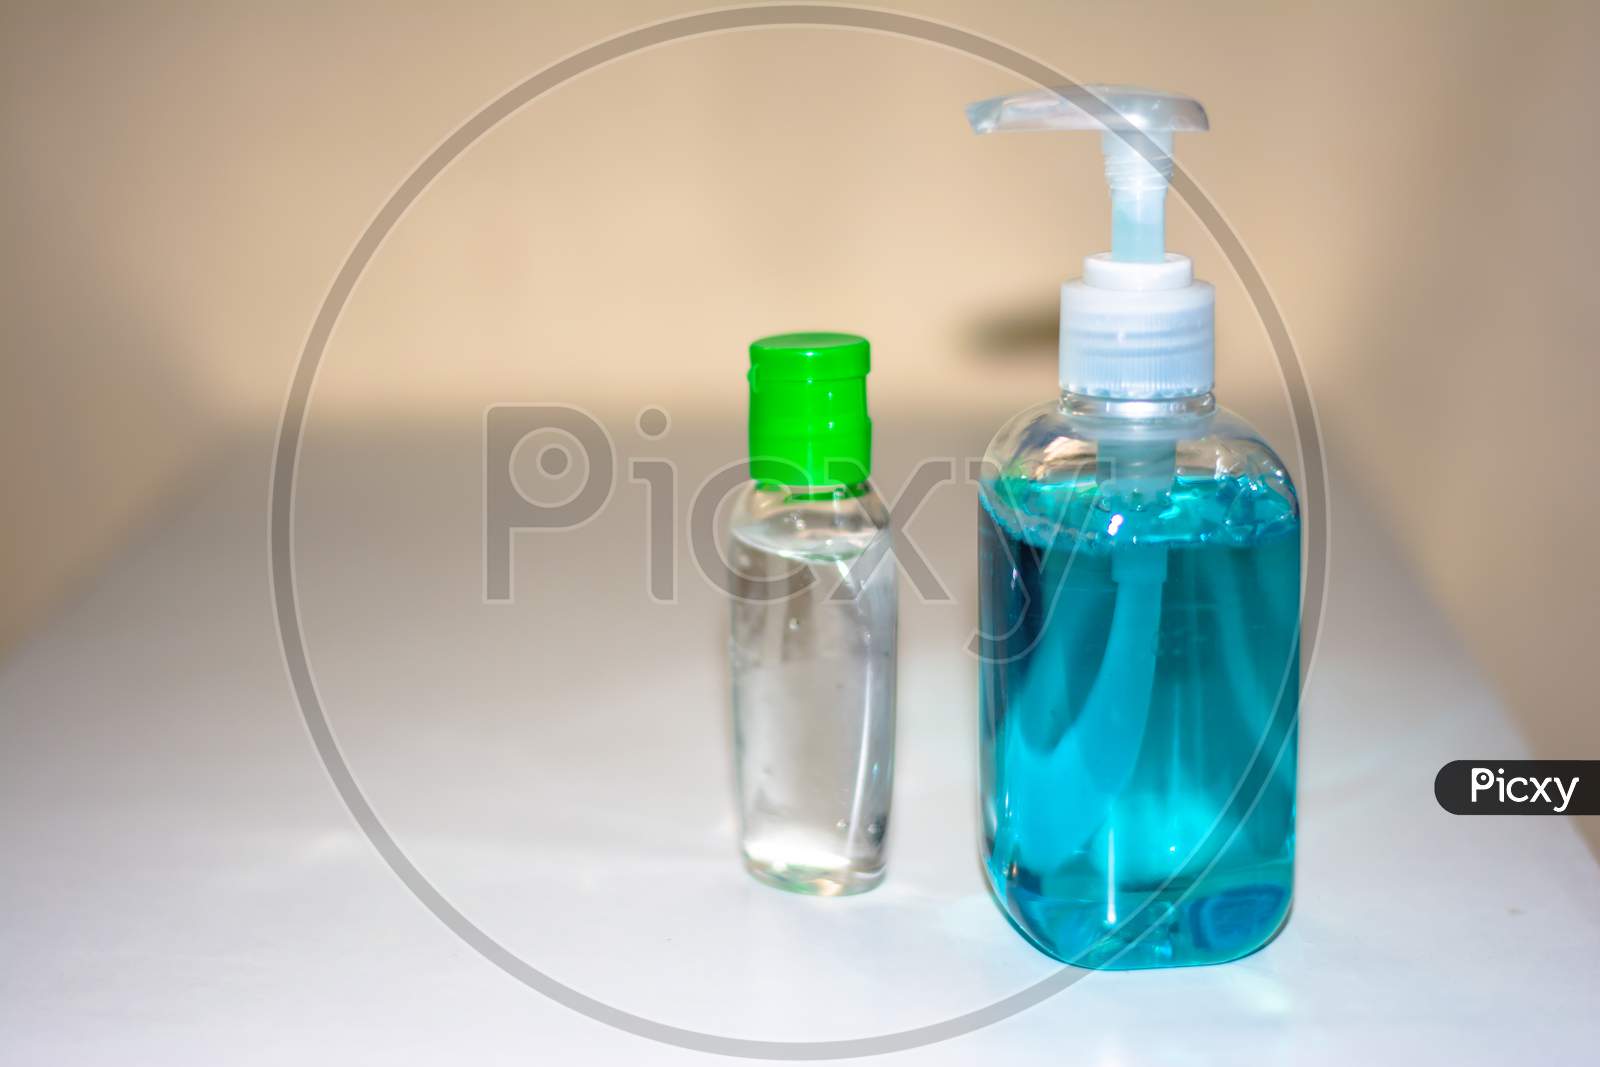 Blue bottles of hand sanitizer and anti-bacterial hand gel, Hand washing, Hand hygiene for Corona virus prevention